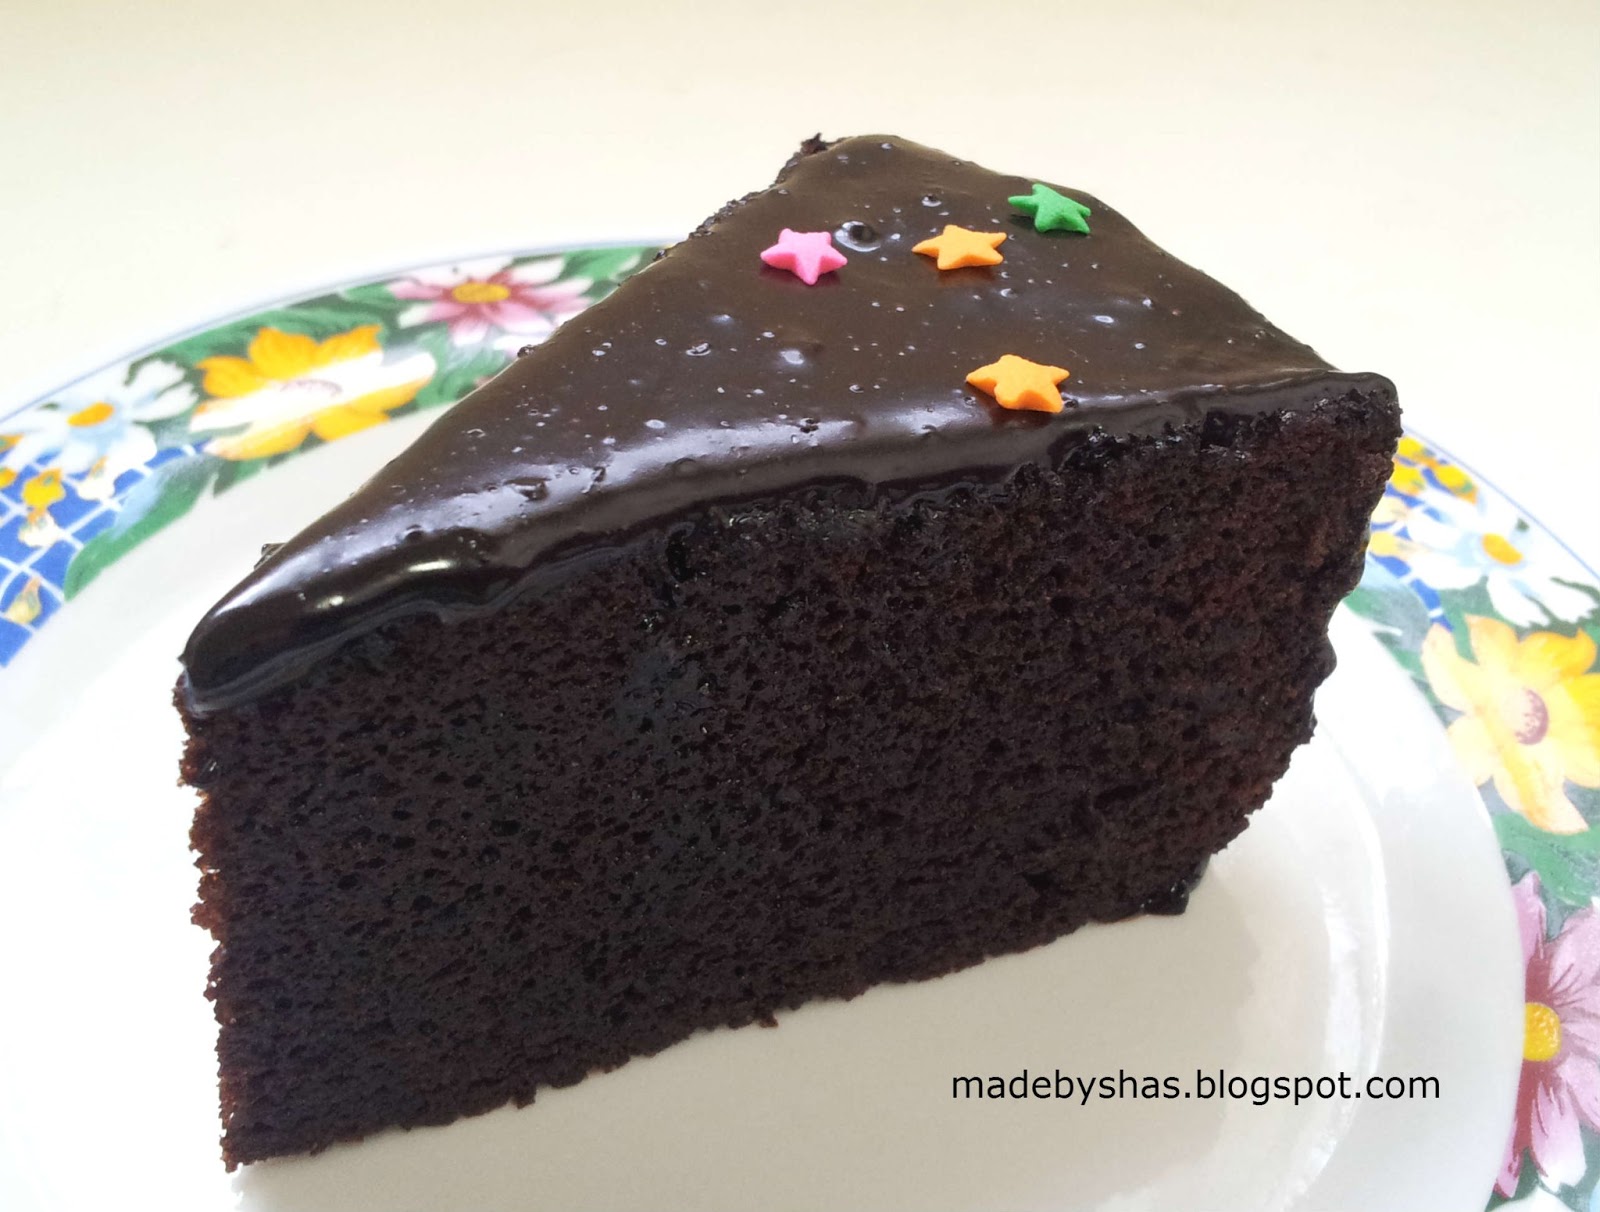 Made by shas: Resepi kek kukus coklat lembab